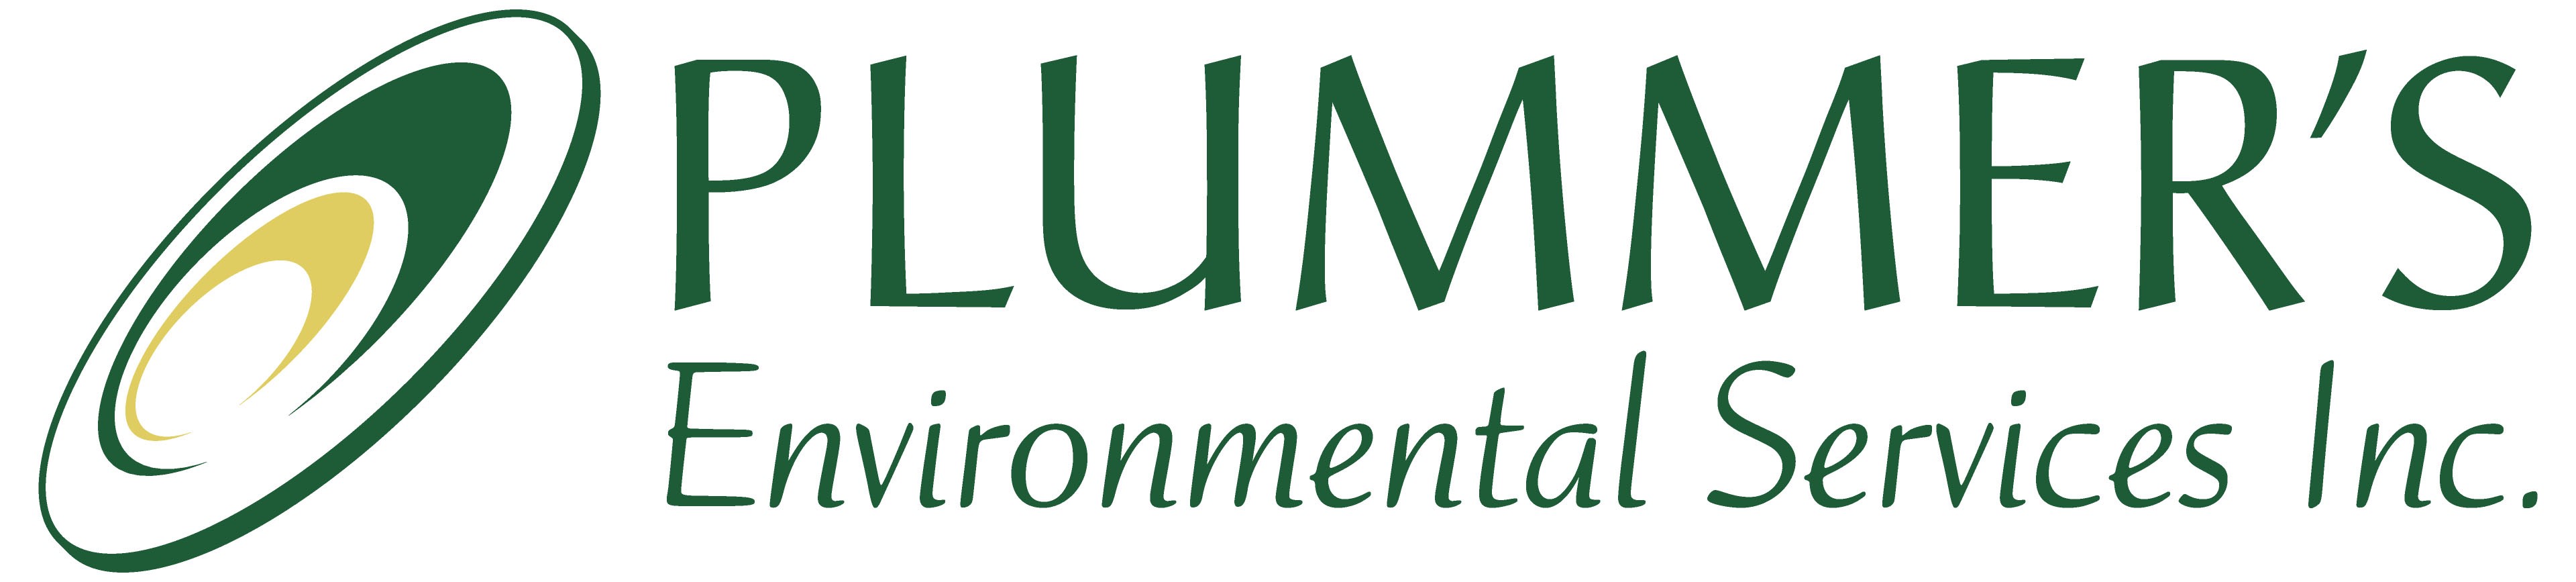 Plummer's Environmental Services